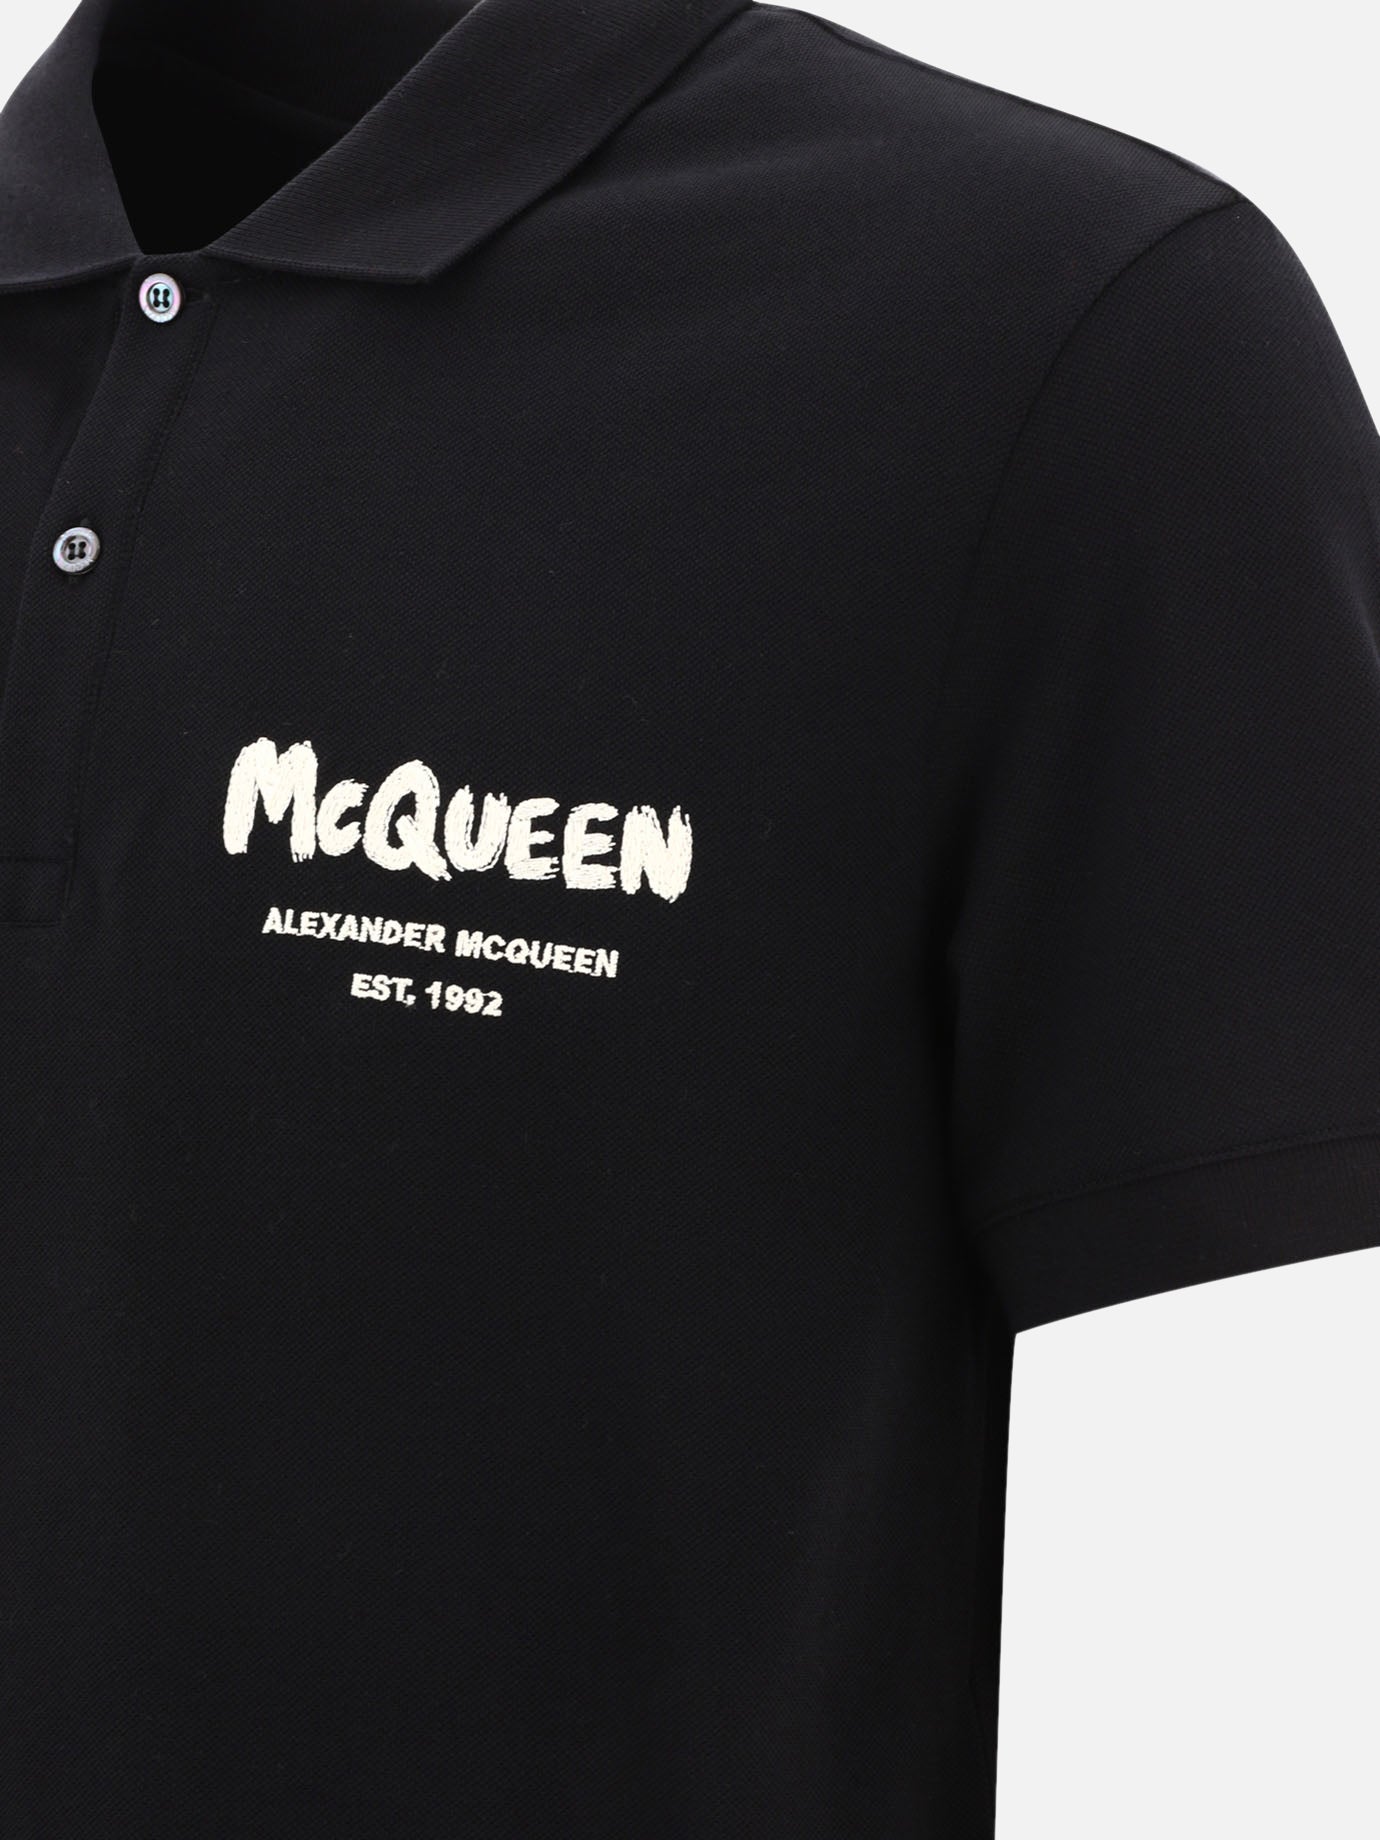 "McQueen Graffiti" polo shirt